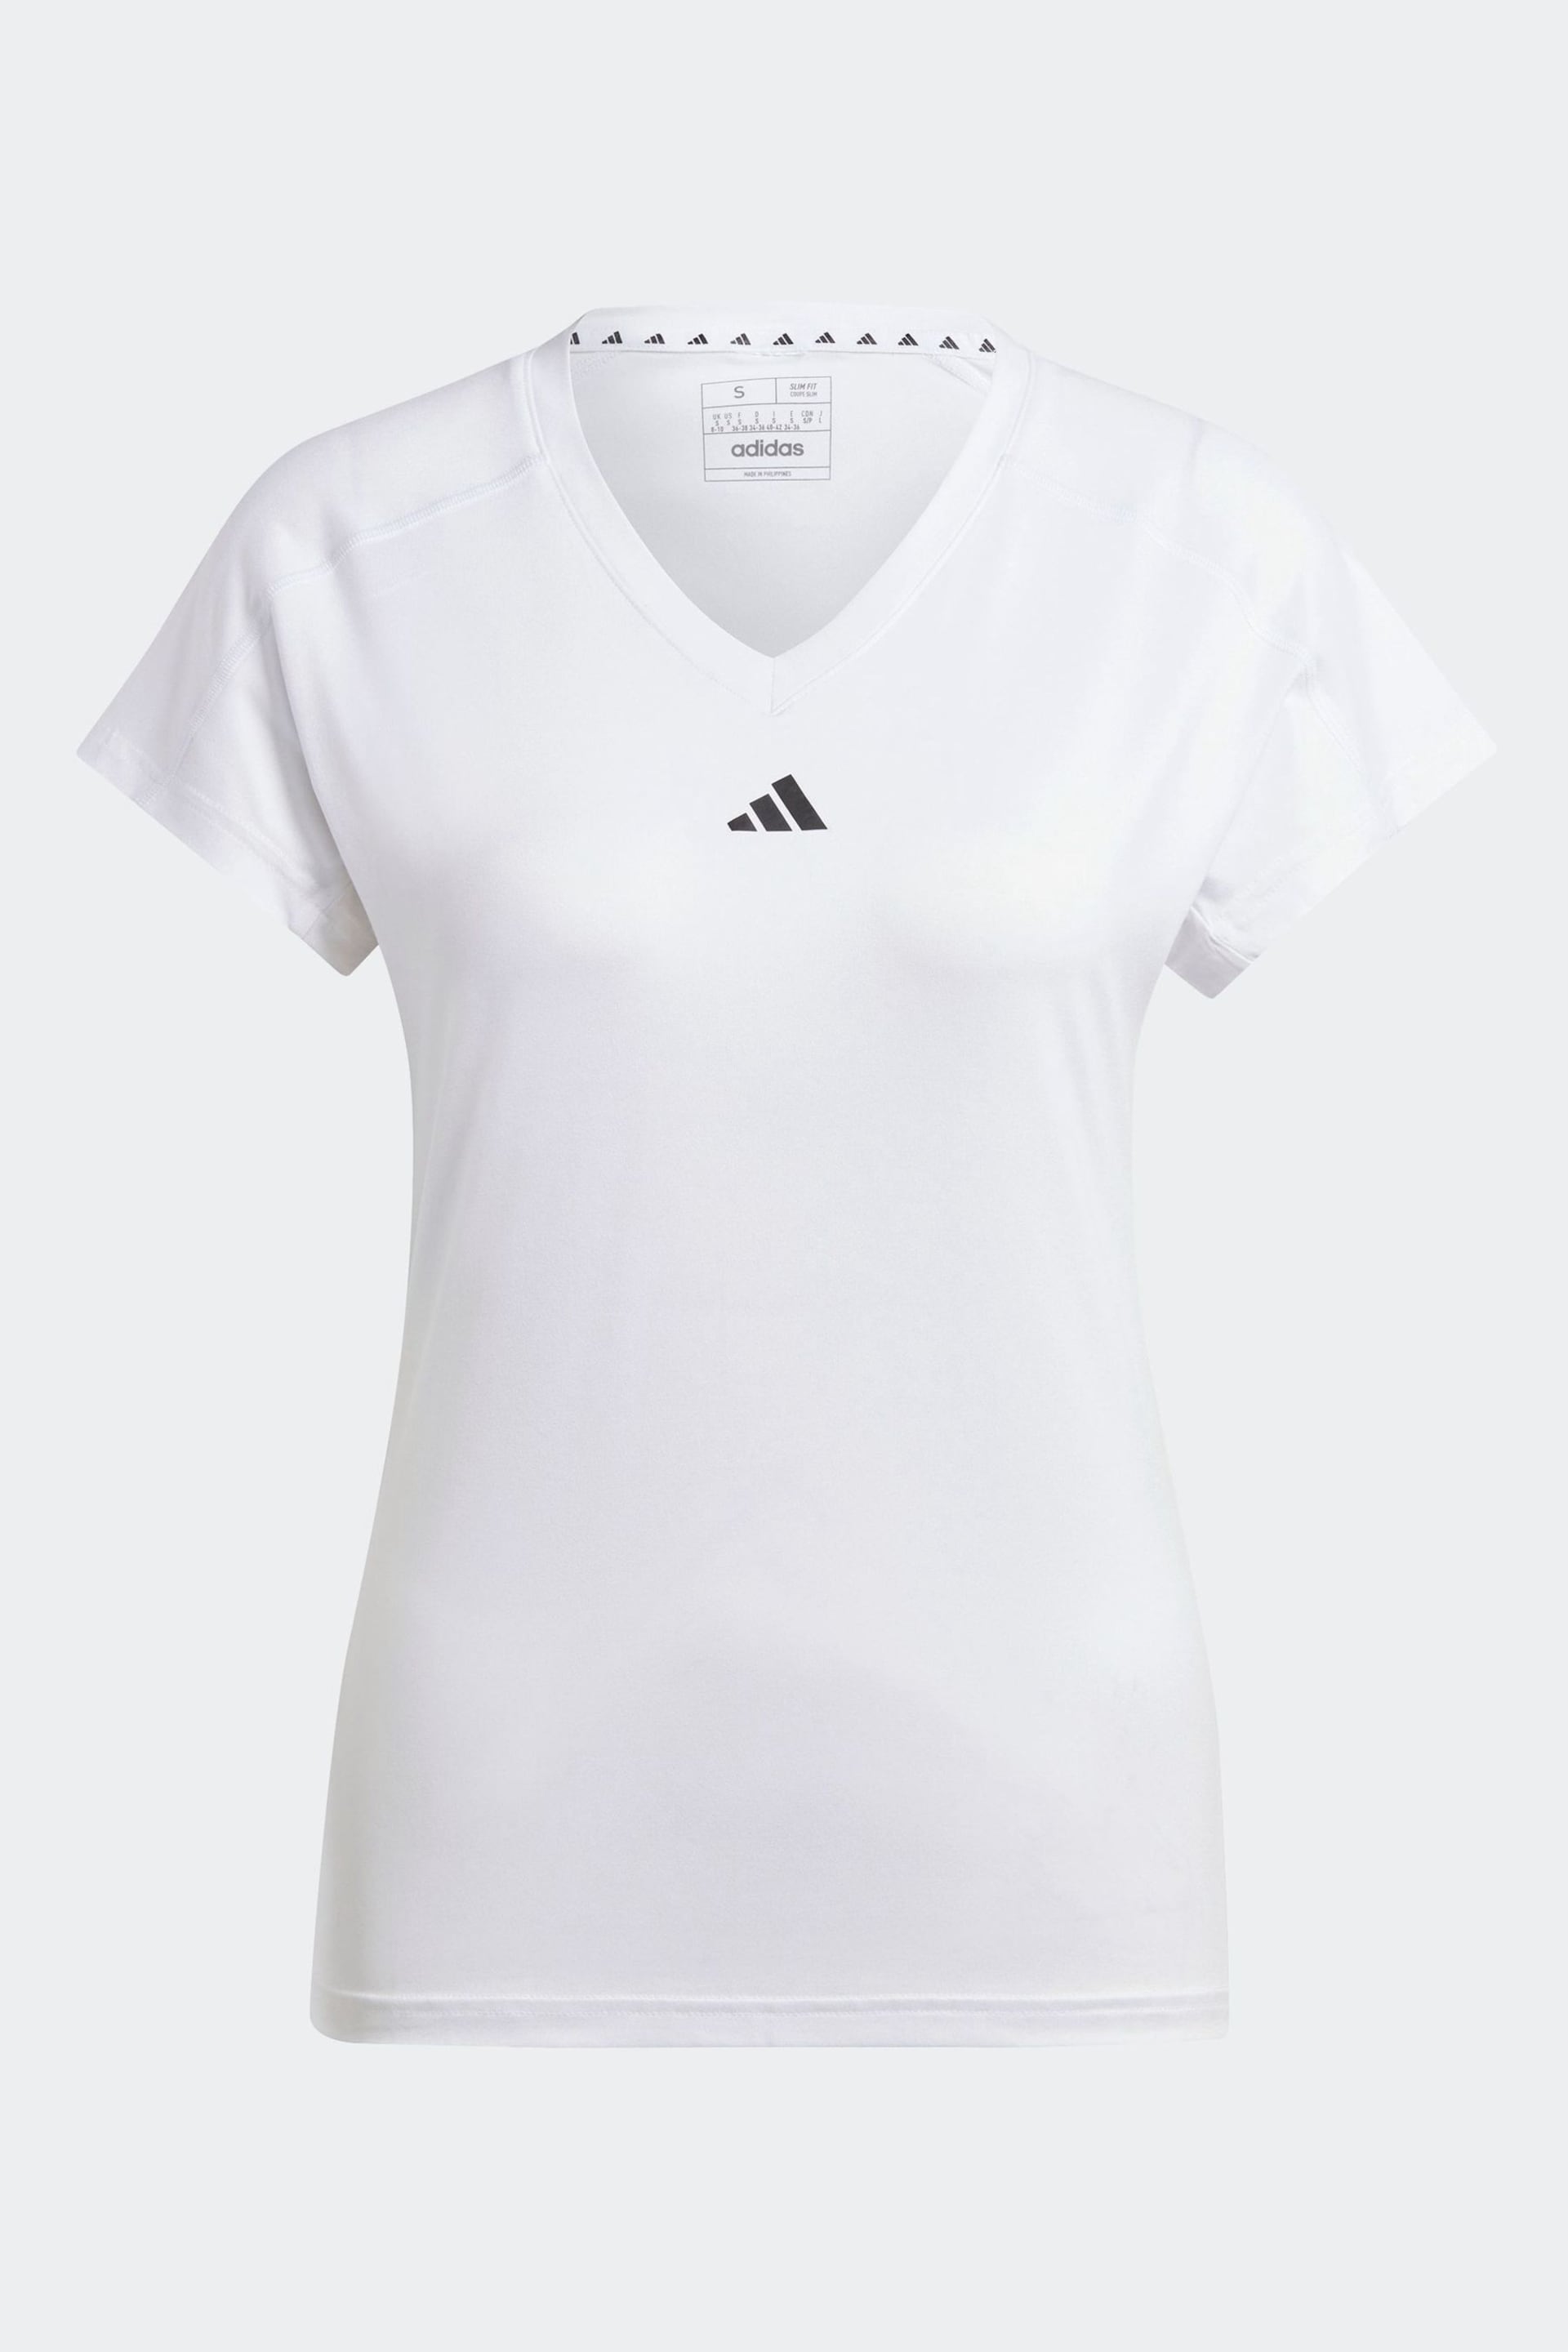 adidas White Aeroready Train Essentials Minimal Branding V-Neck T-Shirt - Image 7 of 7